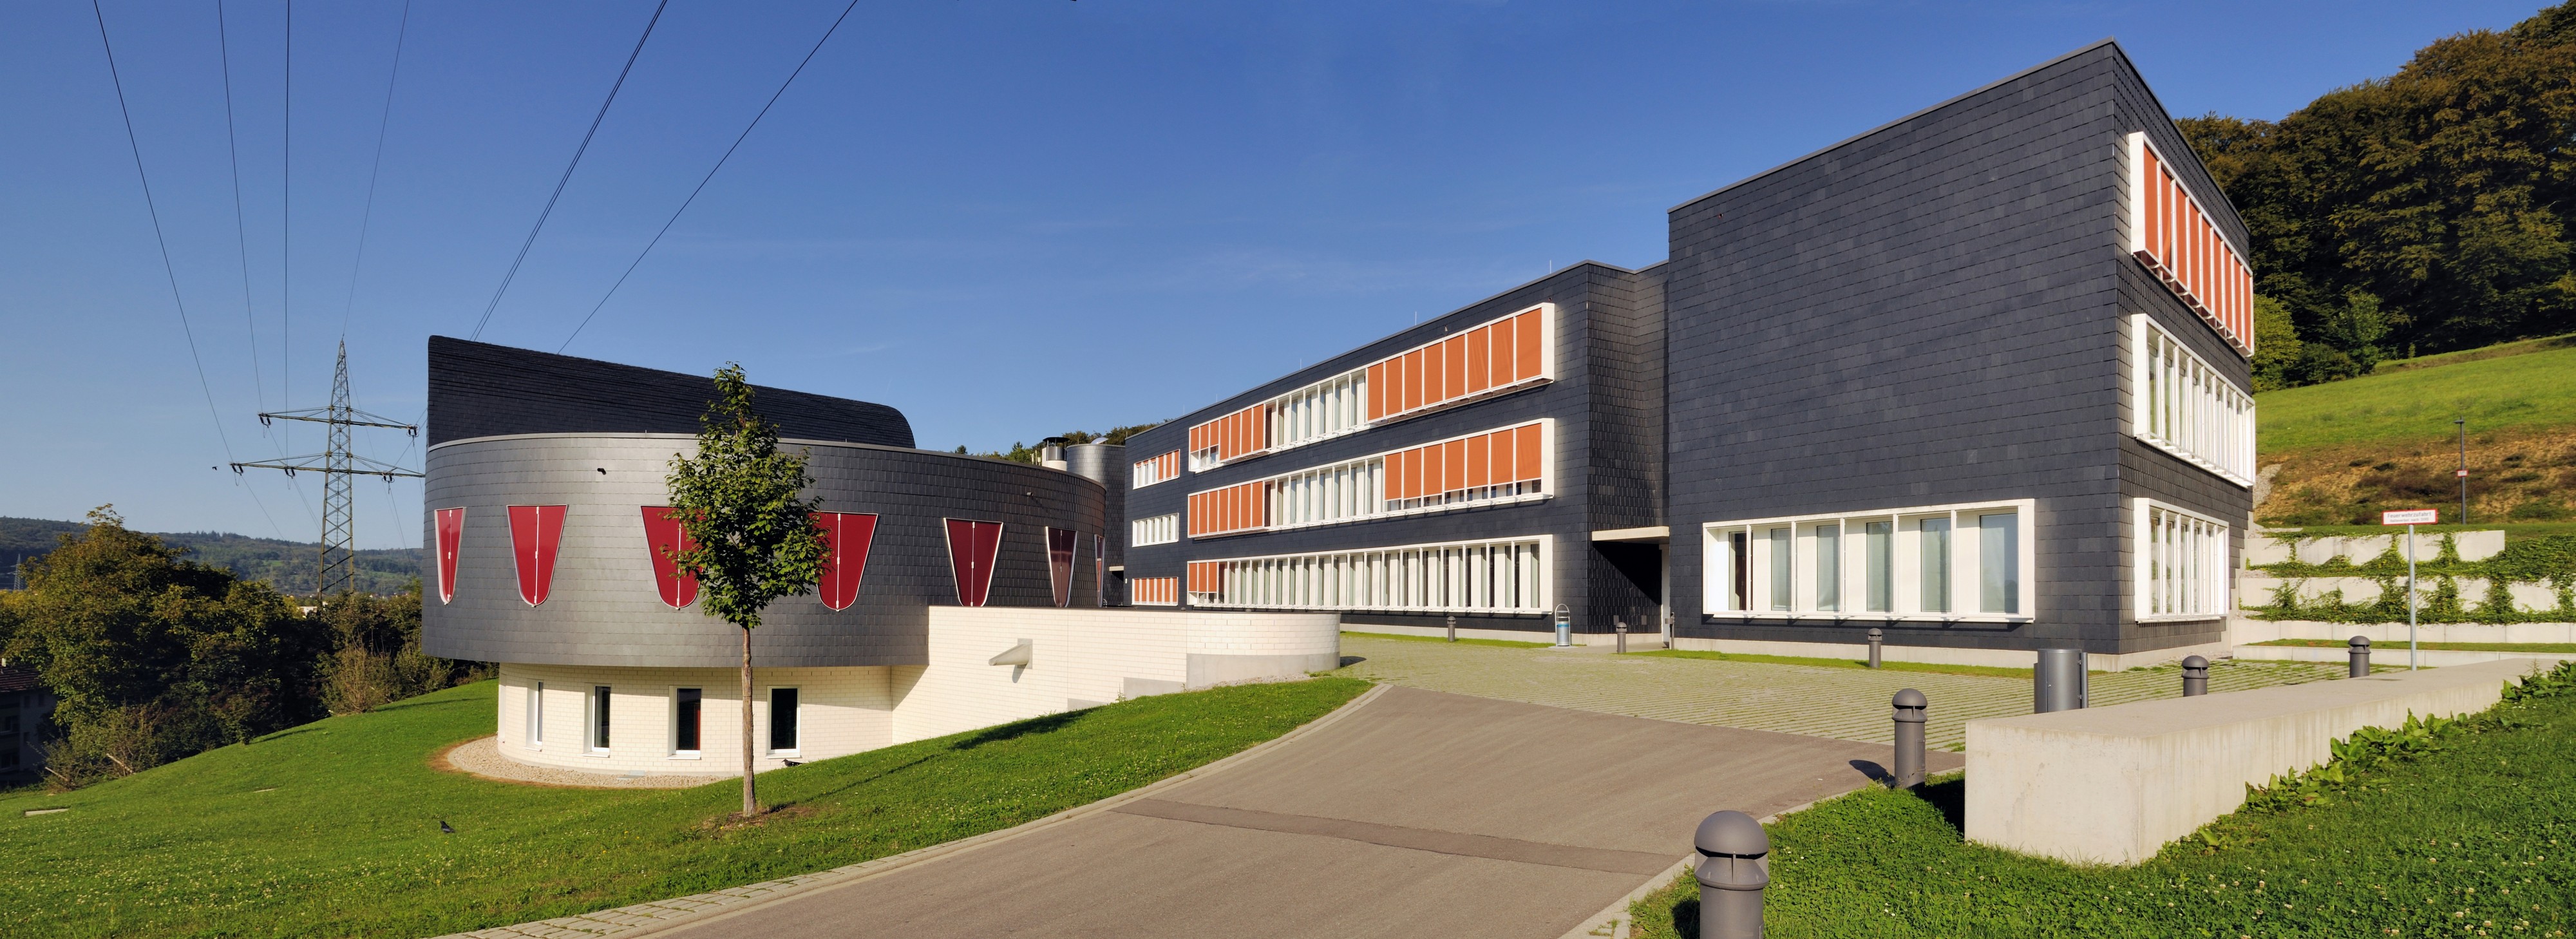 Lörrach - Duale Hochschule BW4